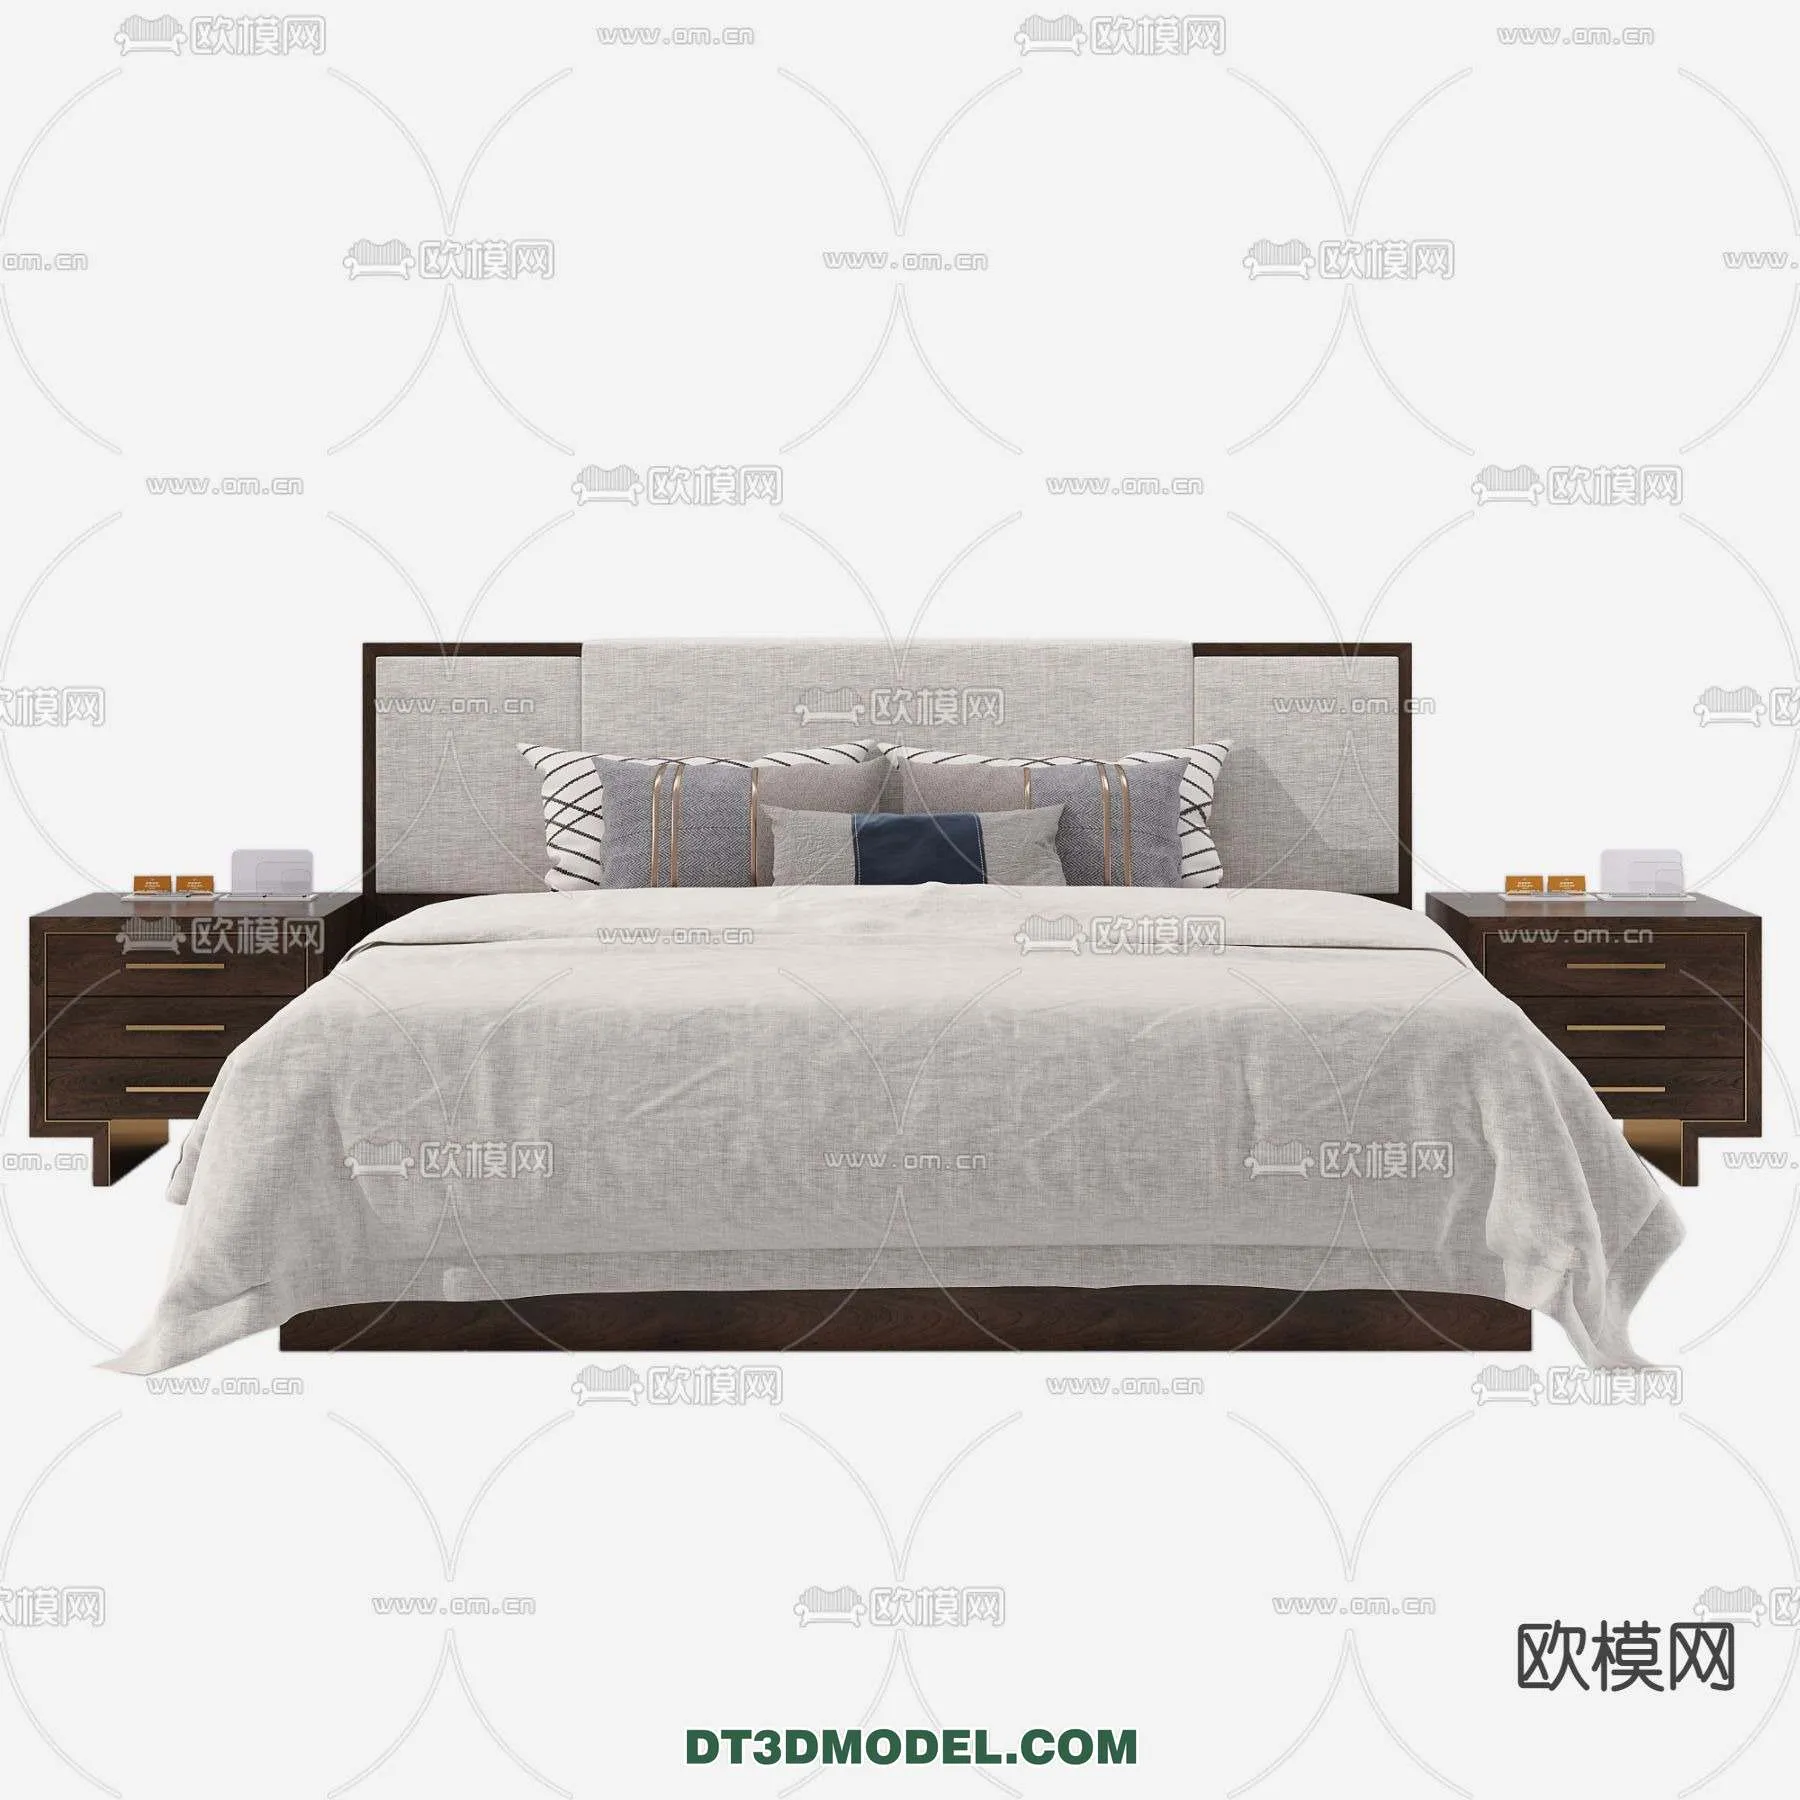 Double Bed 3D Models – 0013